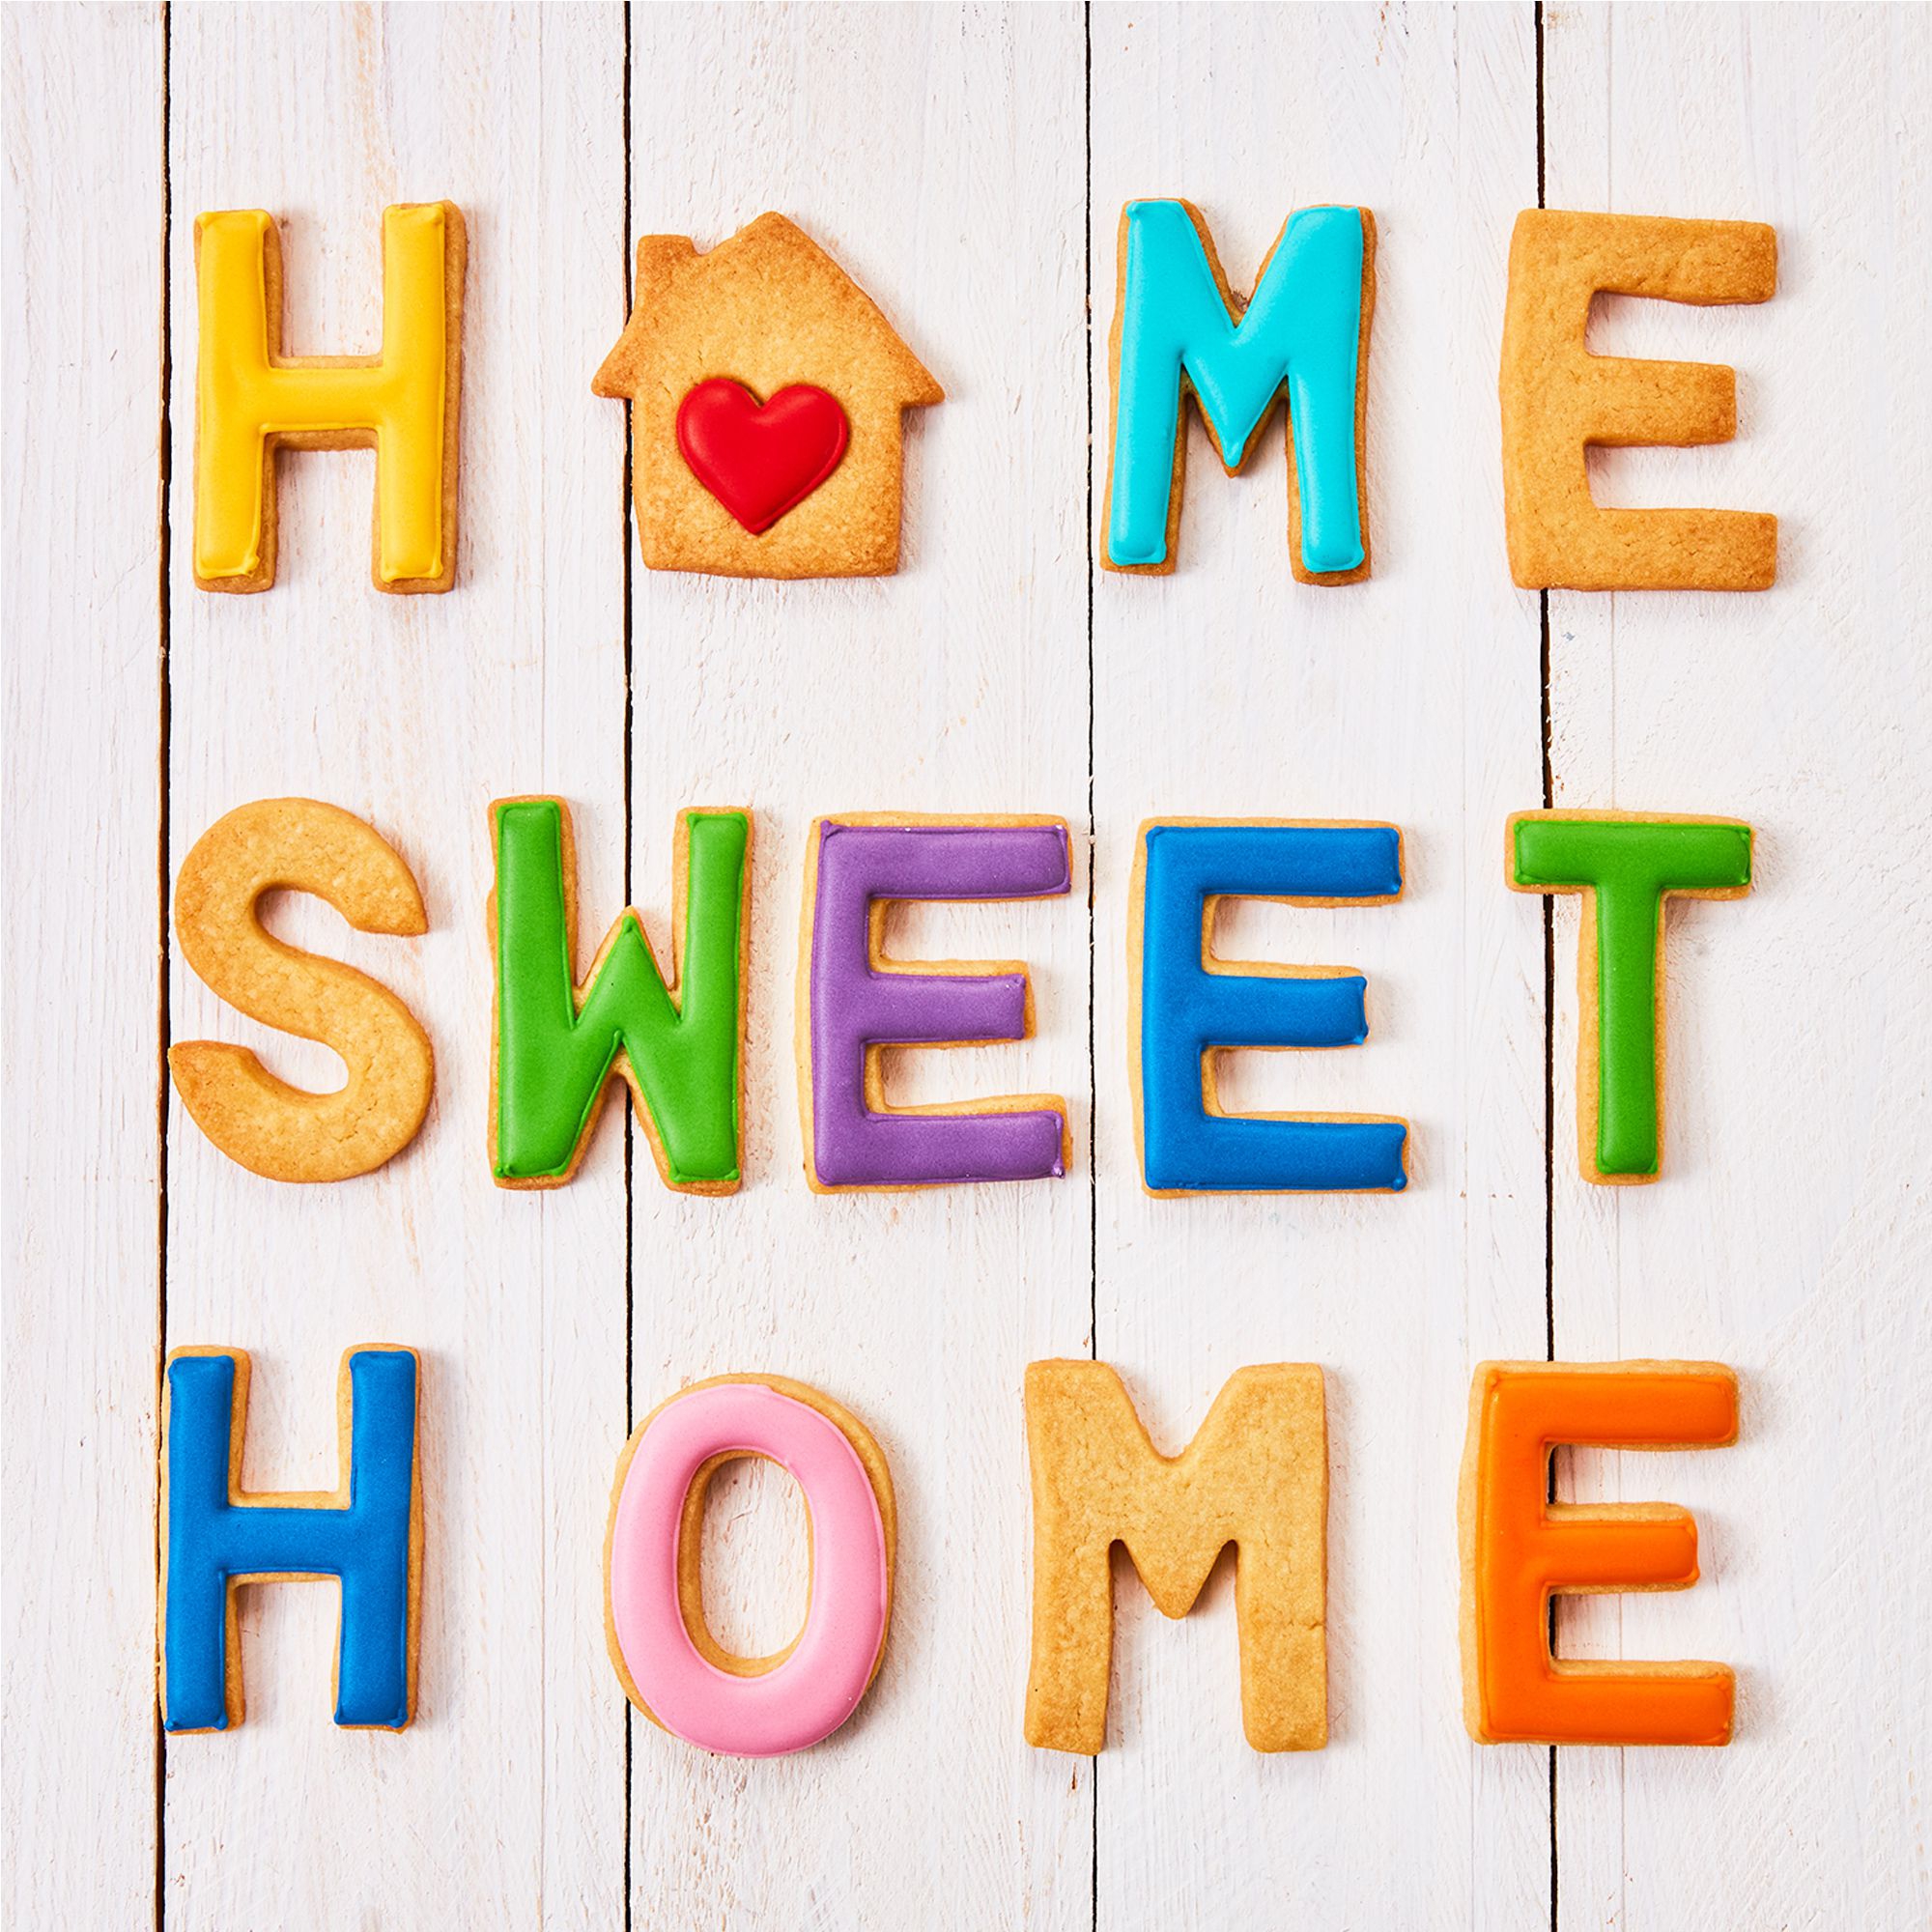 Birkmann - Cookie cutter - Sweet Home - 6 cm